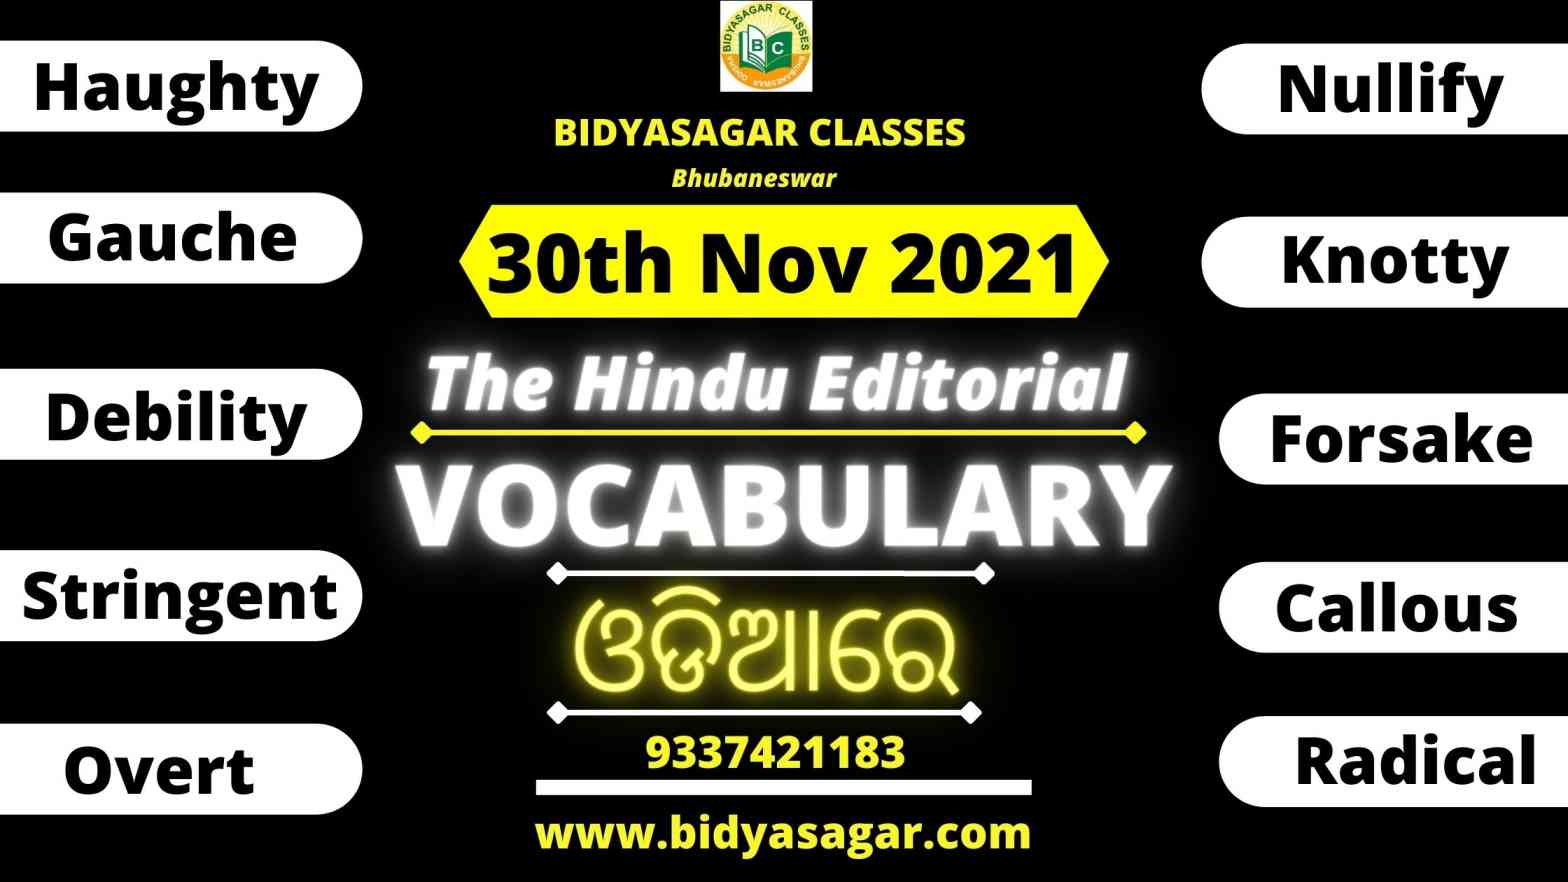 The Hindu Editorial Vocabulary of 30th November 2021